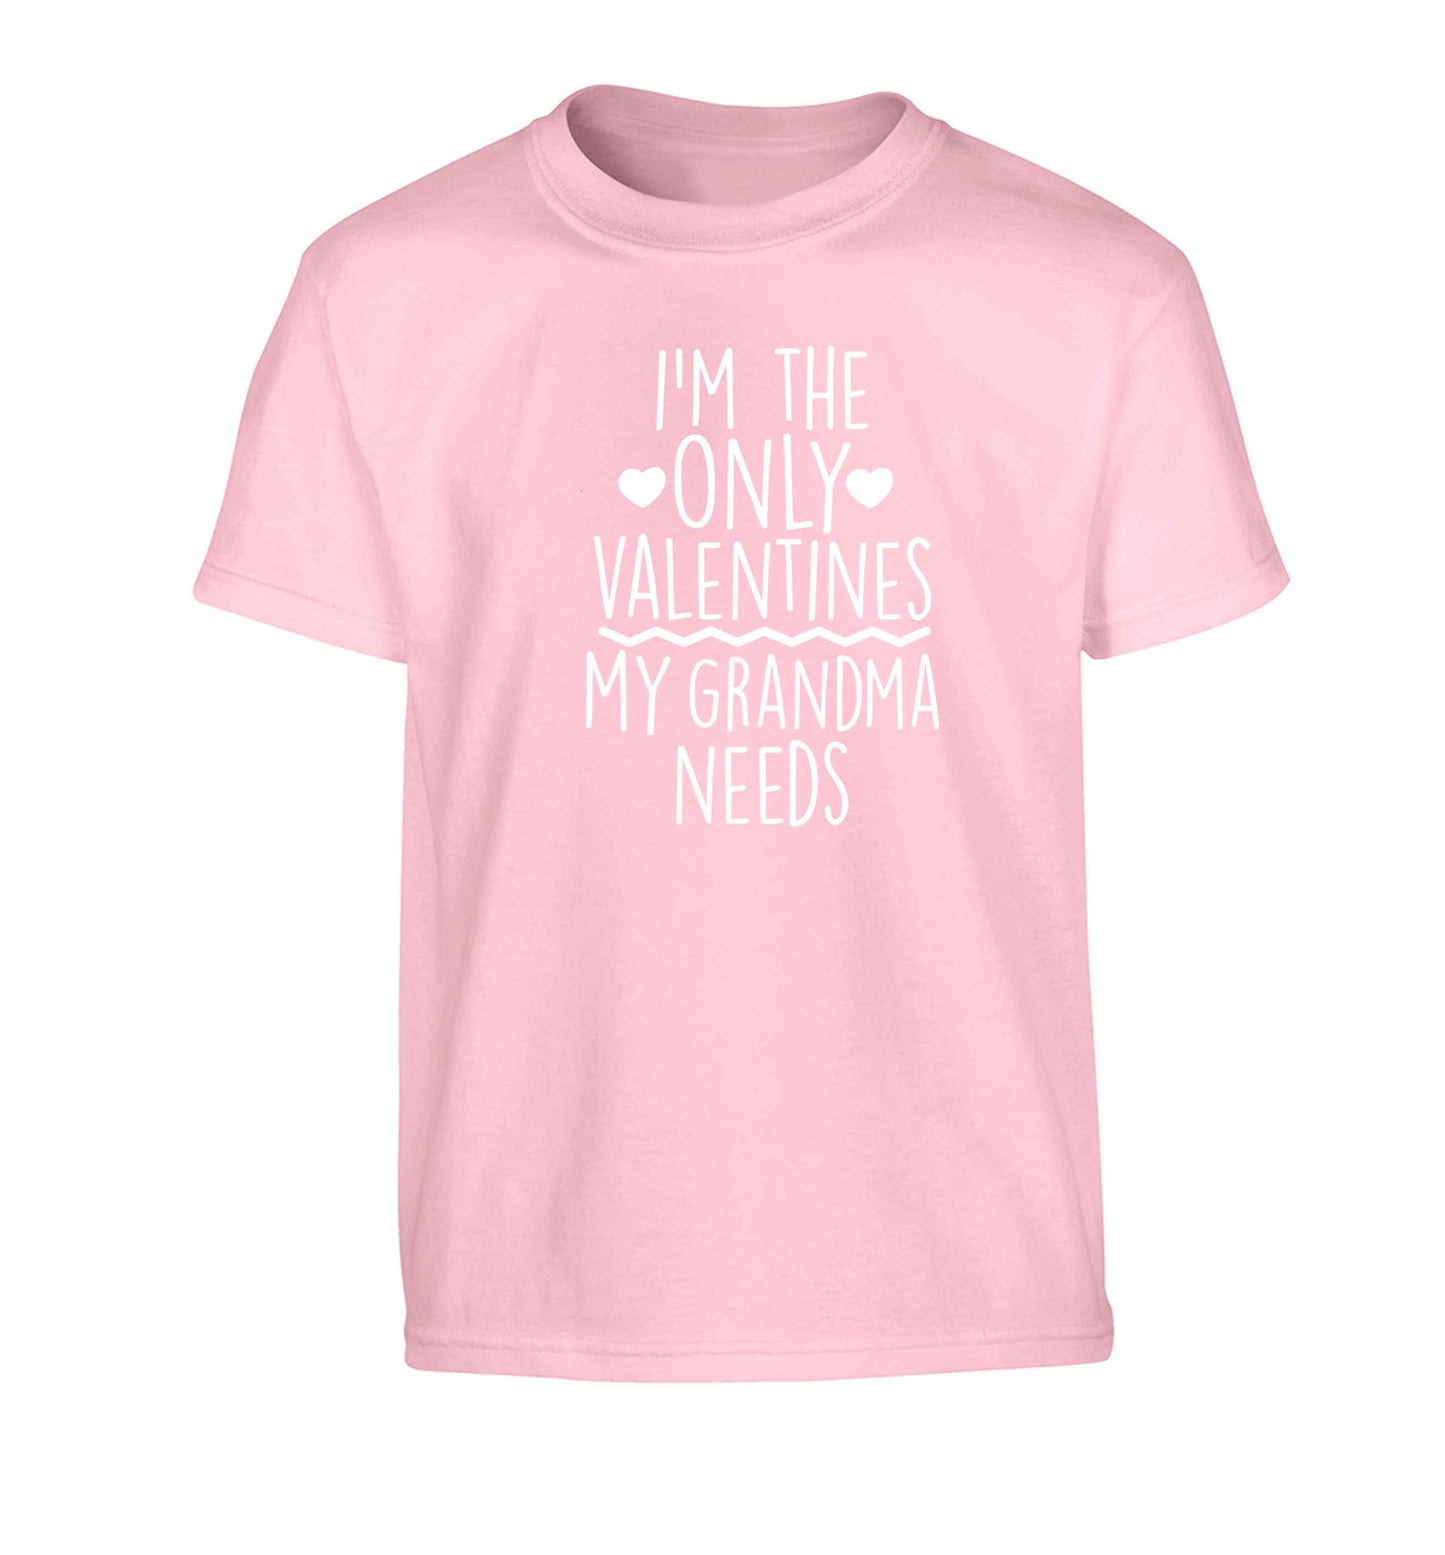 I'm the only valentines my grandma needs Children's light pink Tshirt 12-13 Years